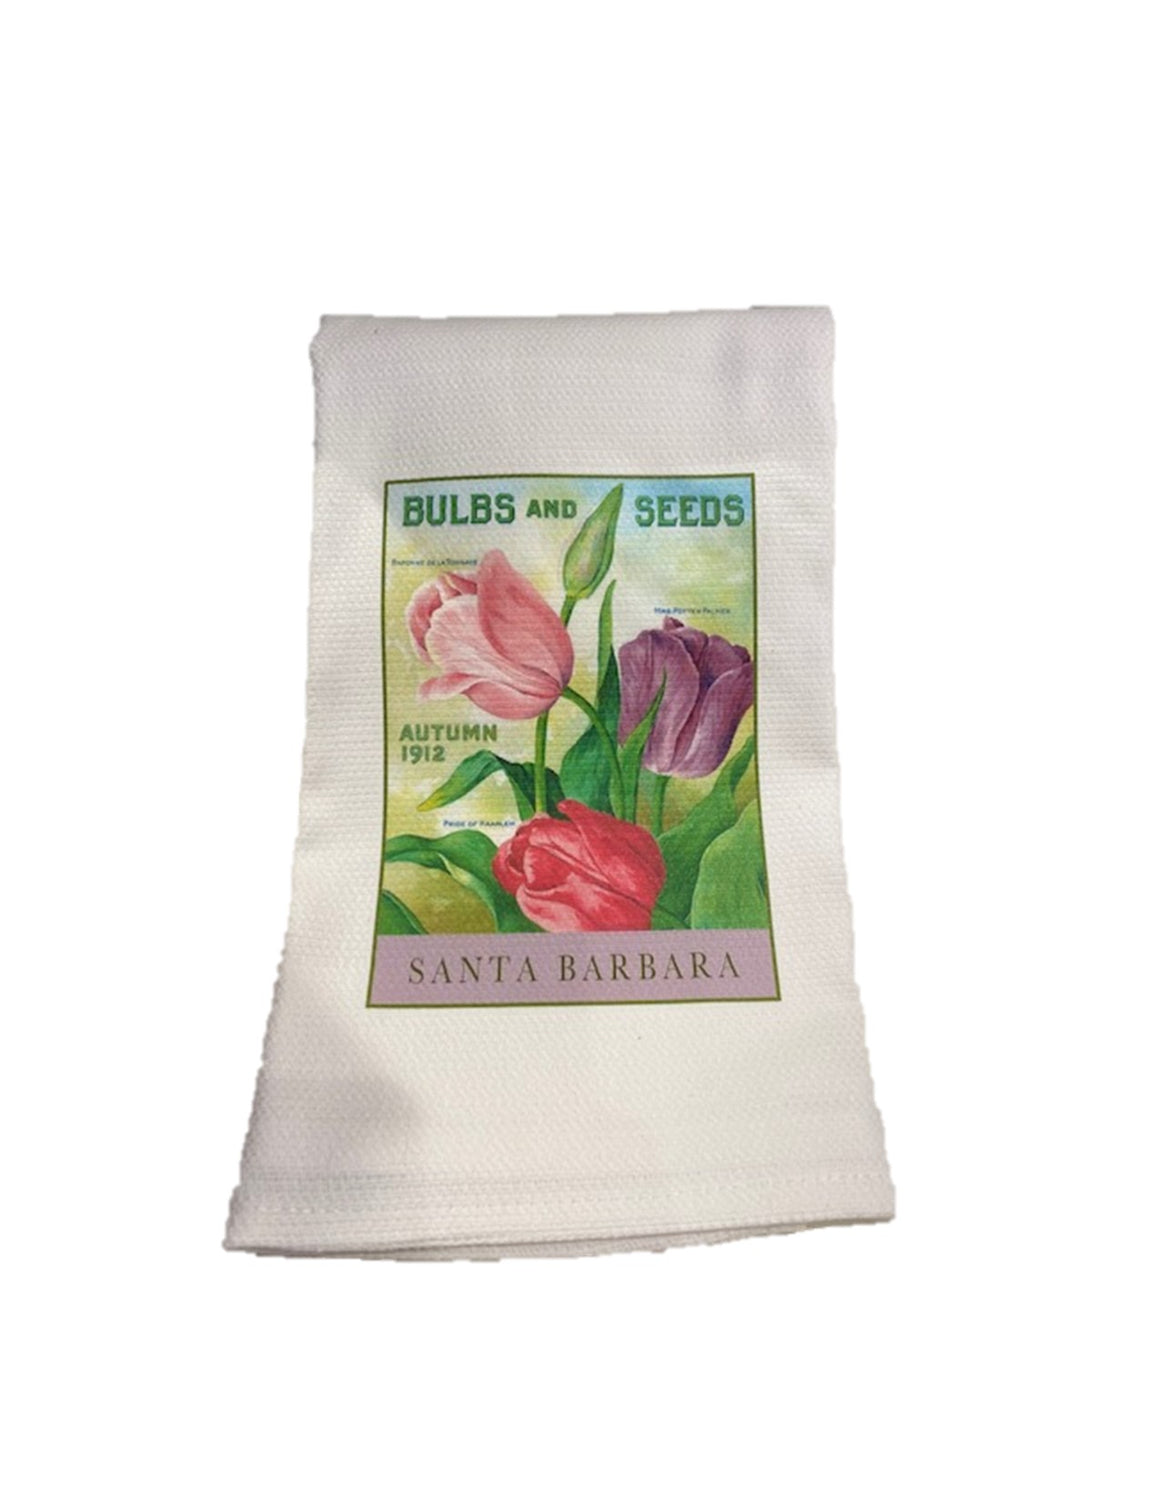 Pacific Swell Designs Tea Towels - Santa Barbara Bulbs and Seeds